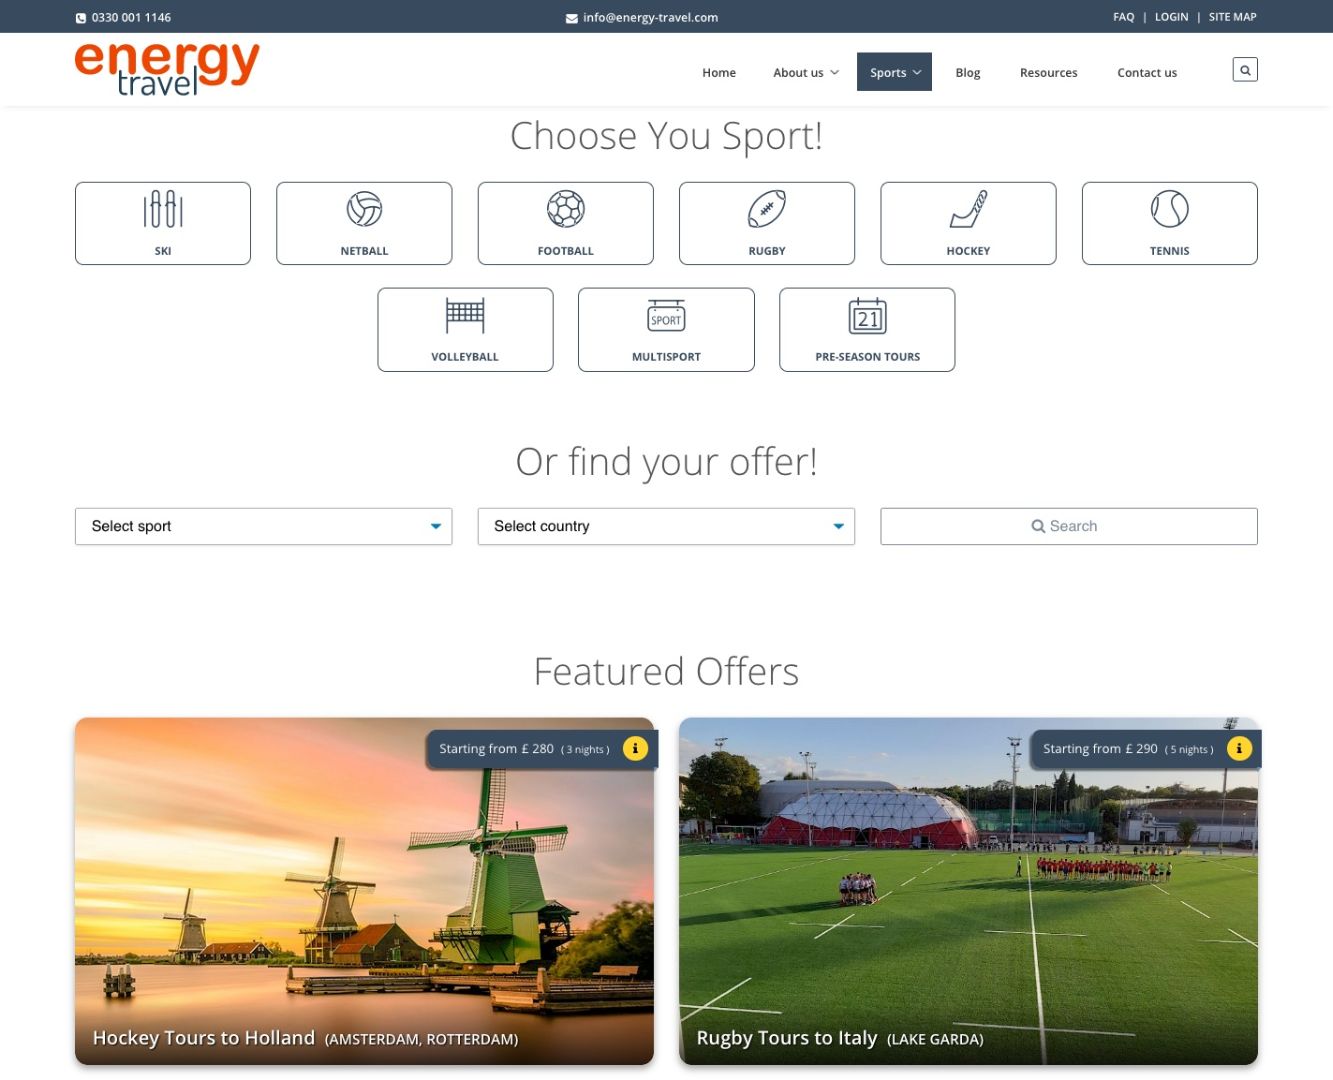 Gallery Energy Travel - Energy 02